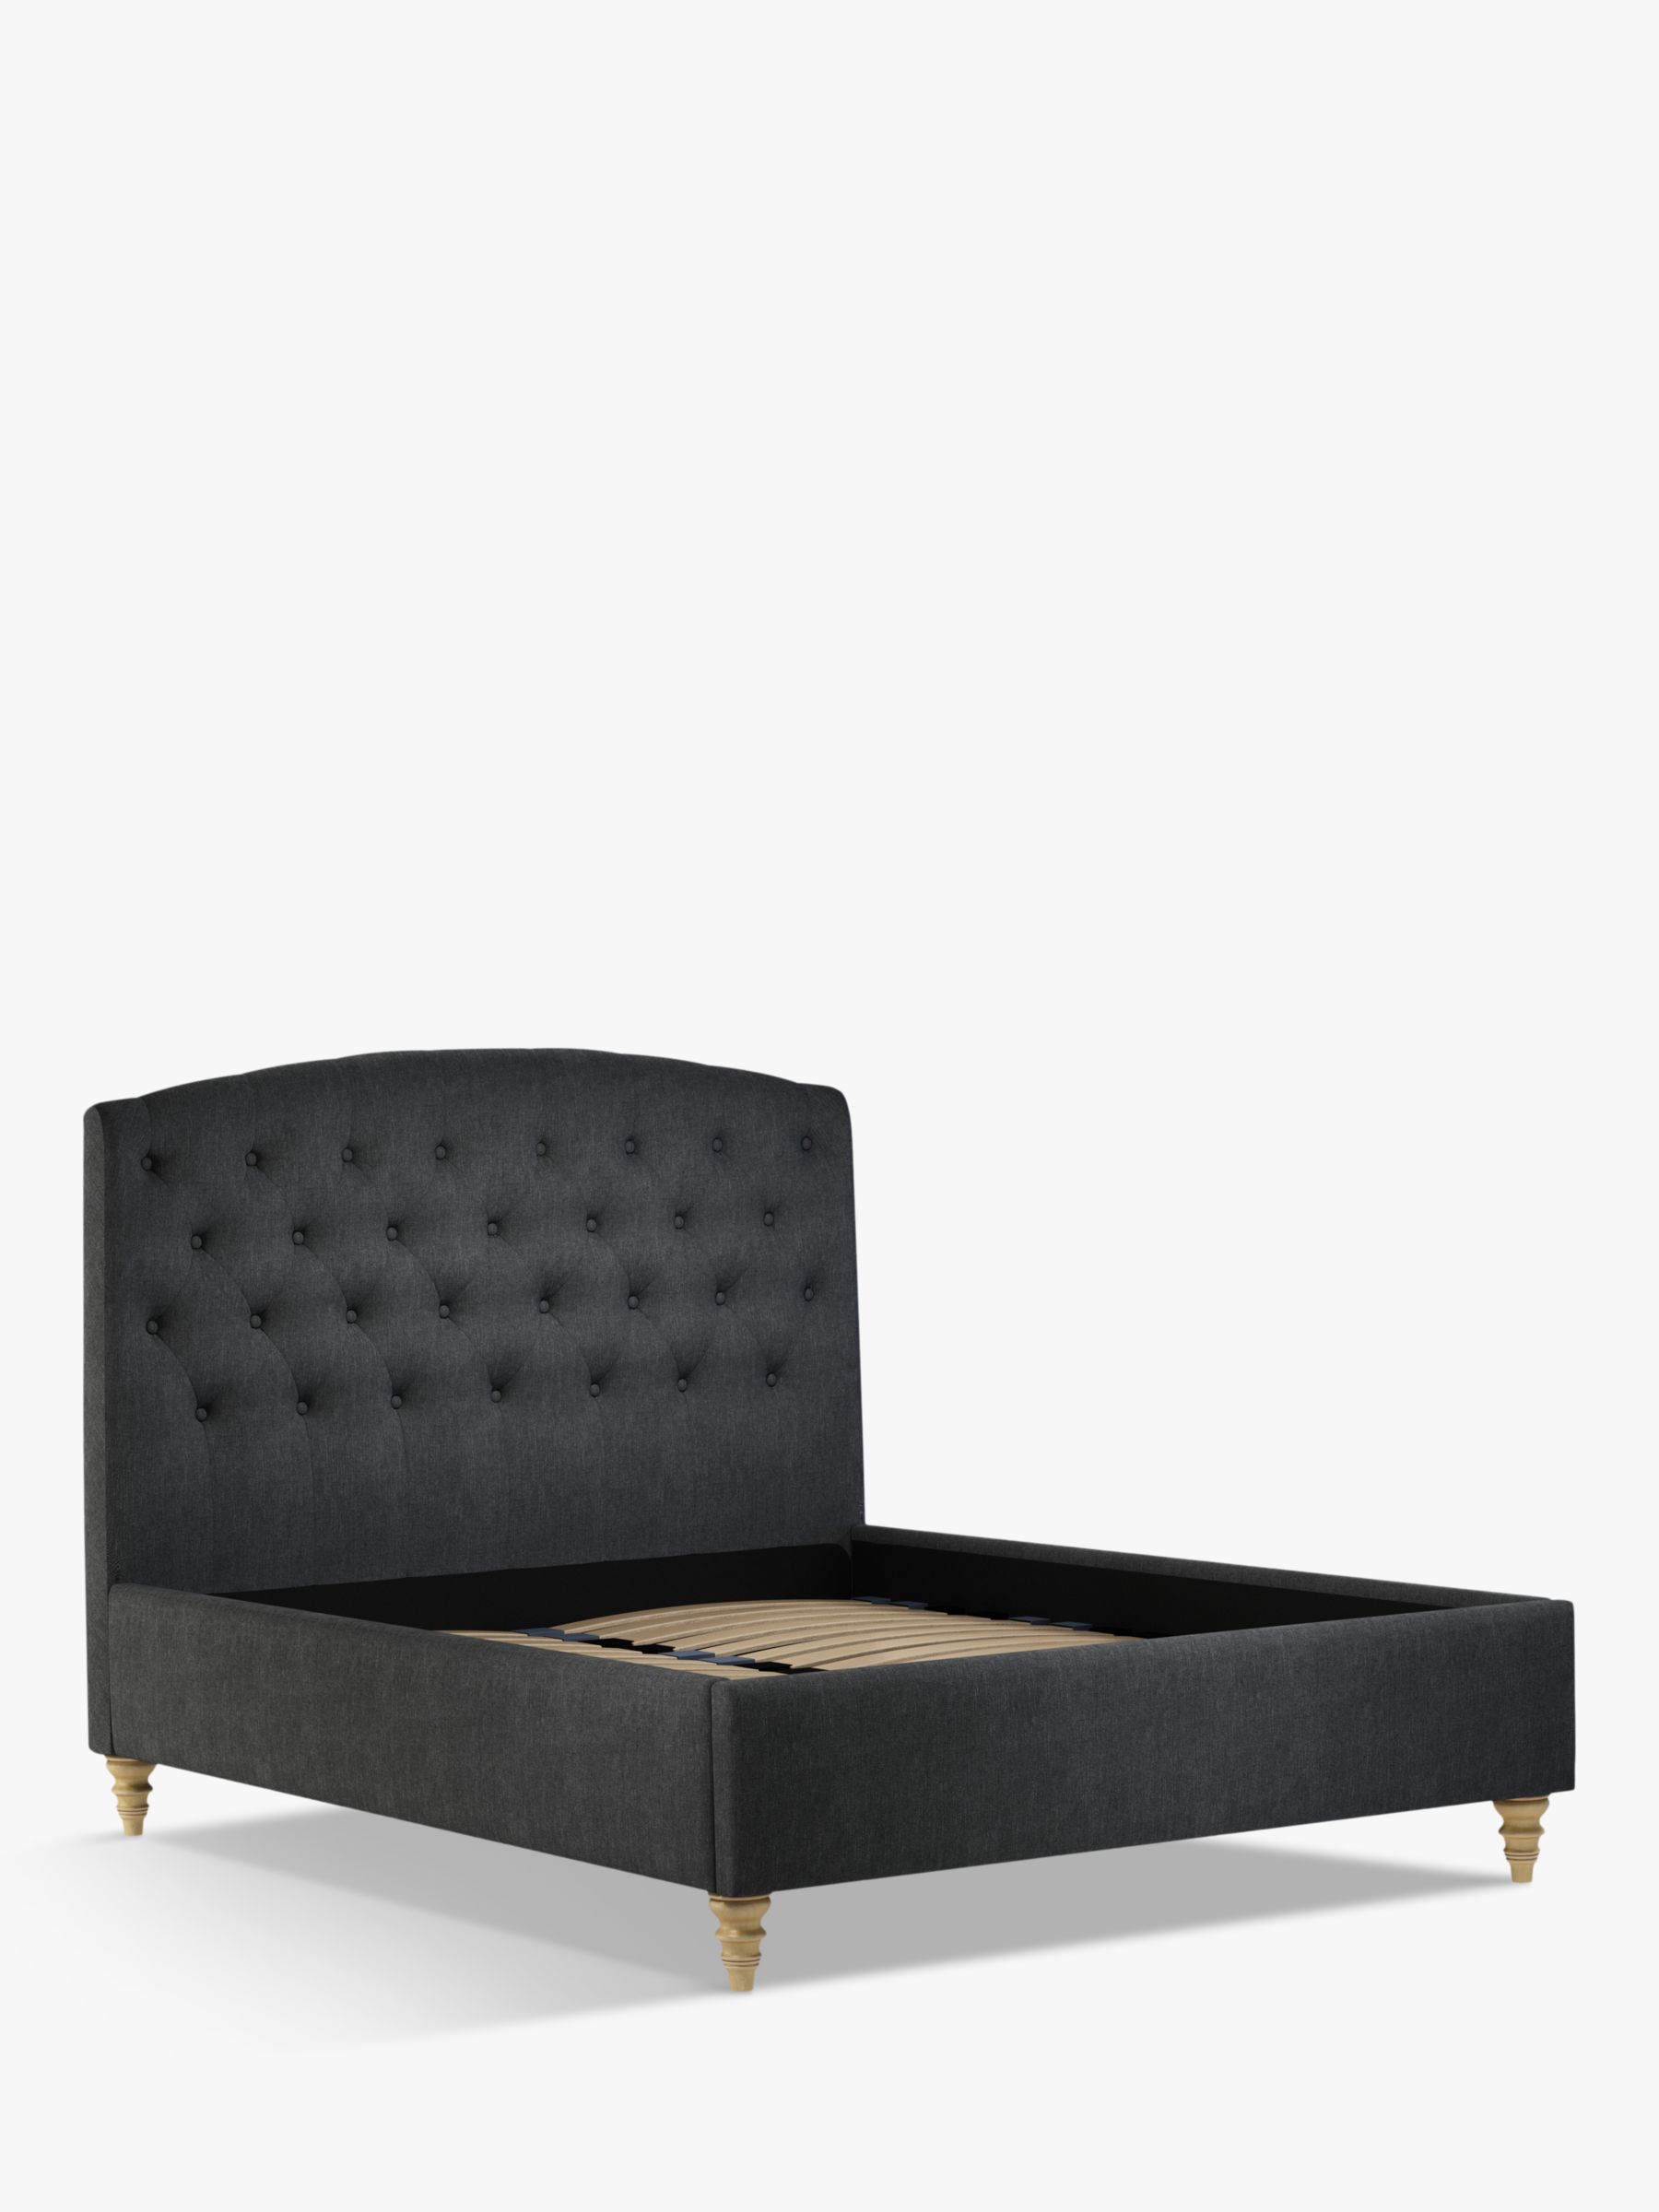 John Lewis Partners Rouen Upholstered, King Size Upholstered Bed Frame With Wood Slats Platform Headboard Charcoal